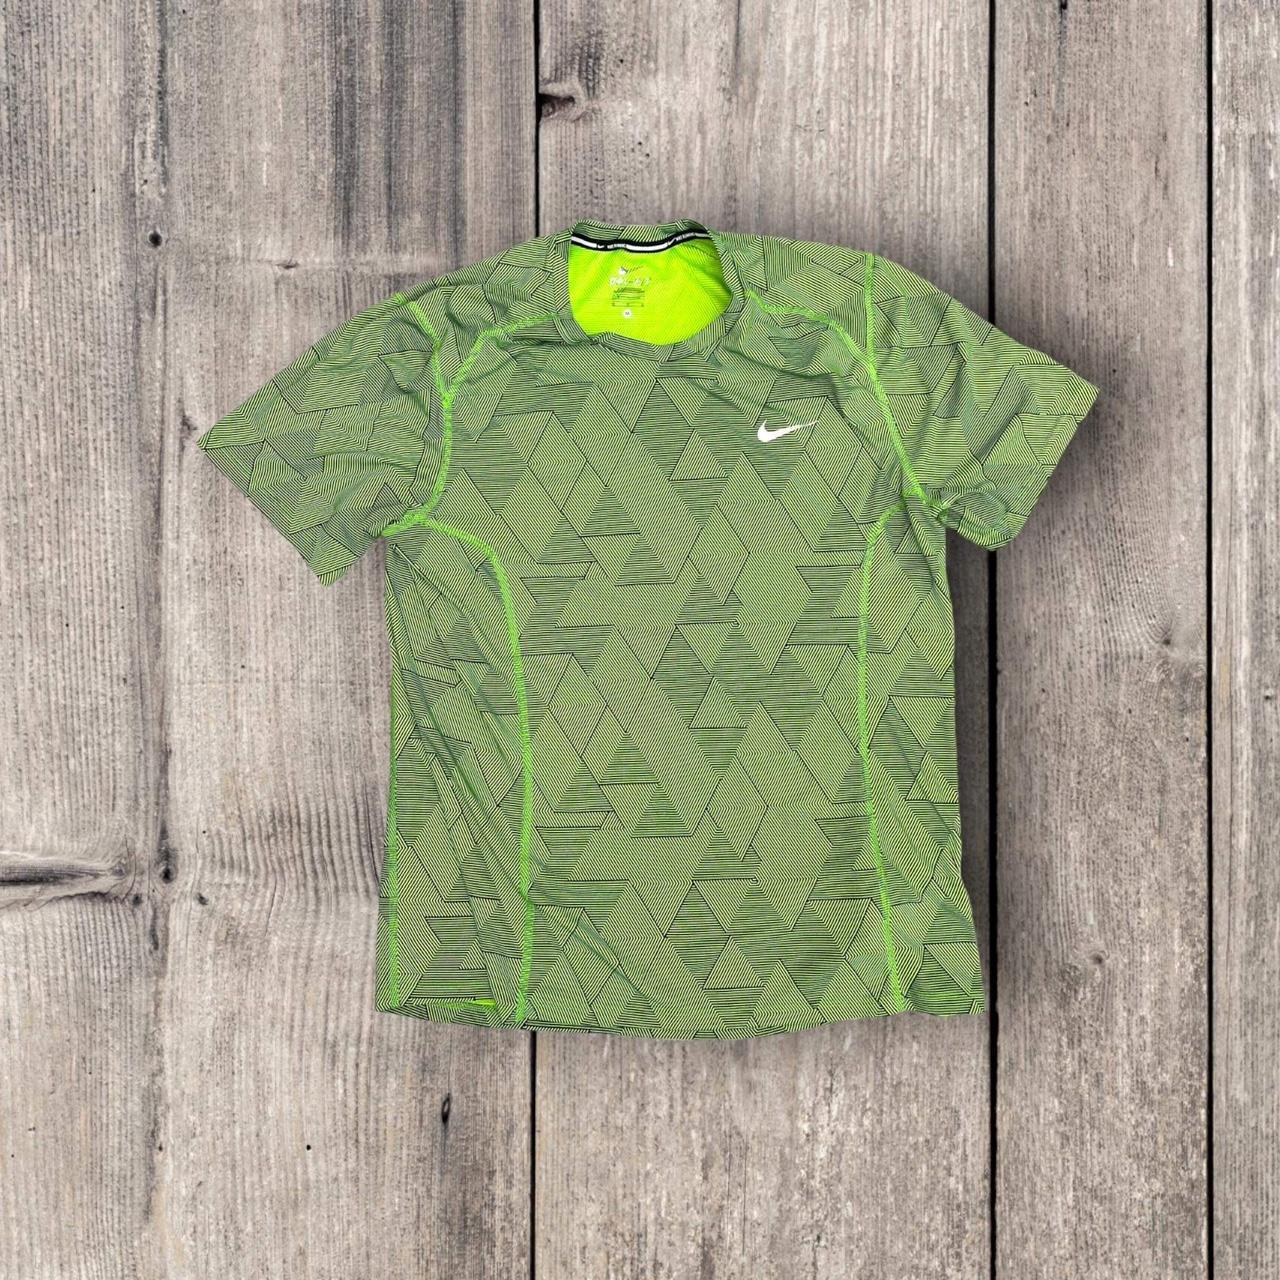 Nike Dri fit reflective T-shirt ️Size label -... - Depop